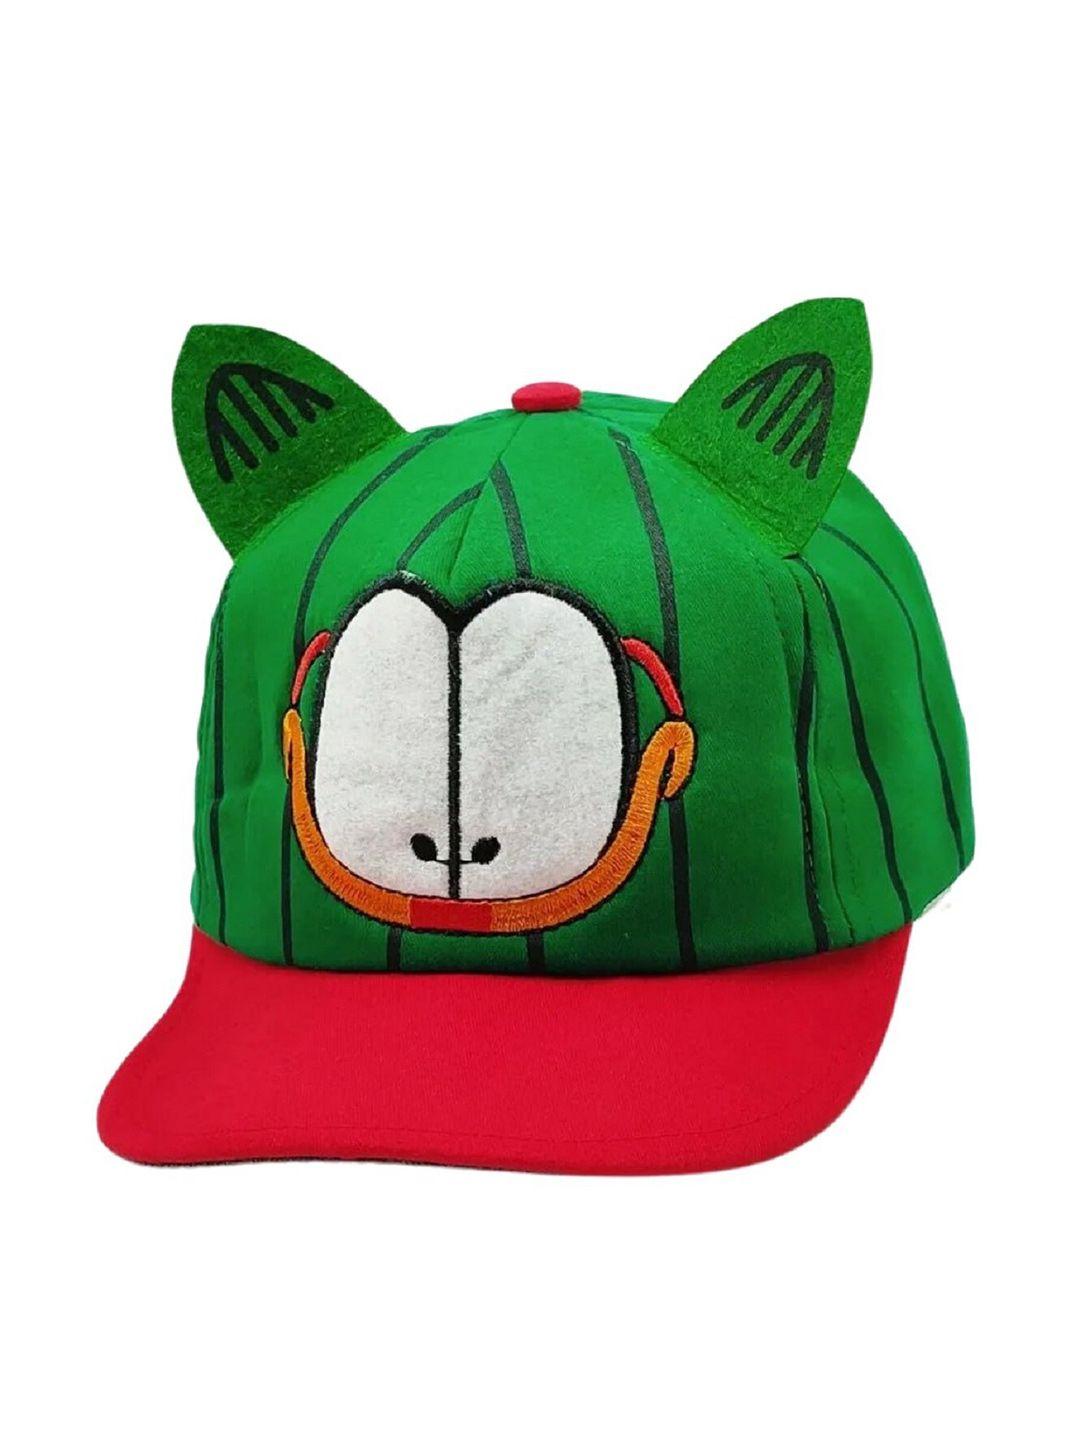 zacharias unisex kids green & red embroidered new york knicks baseball cap